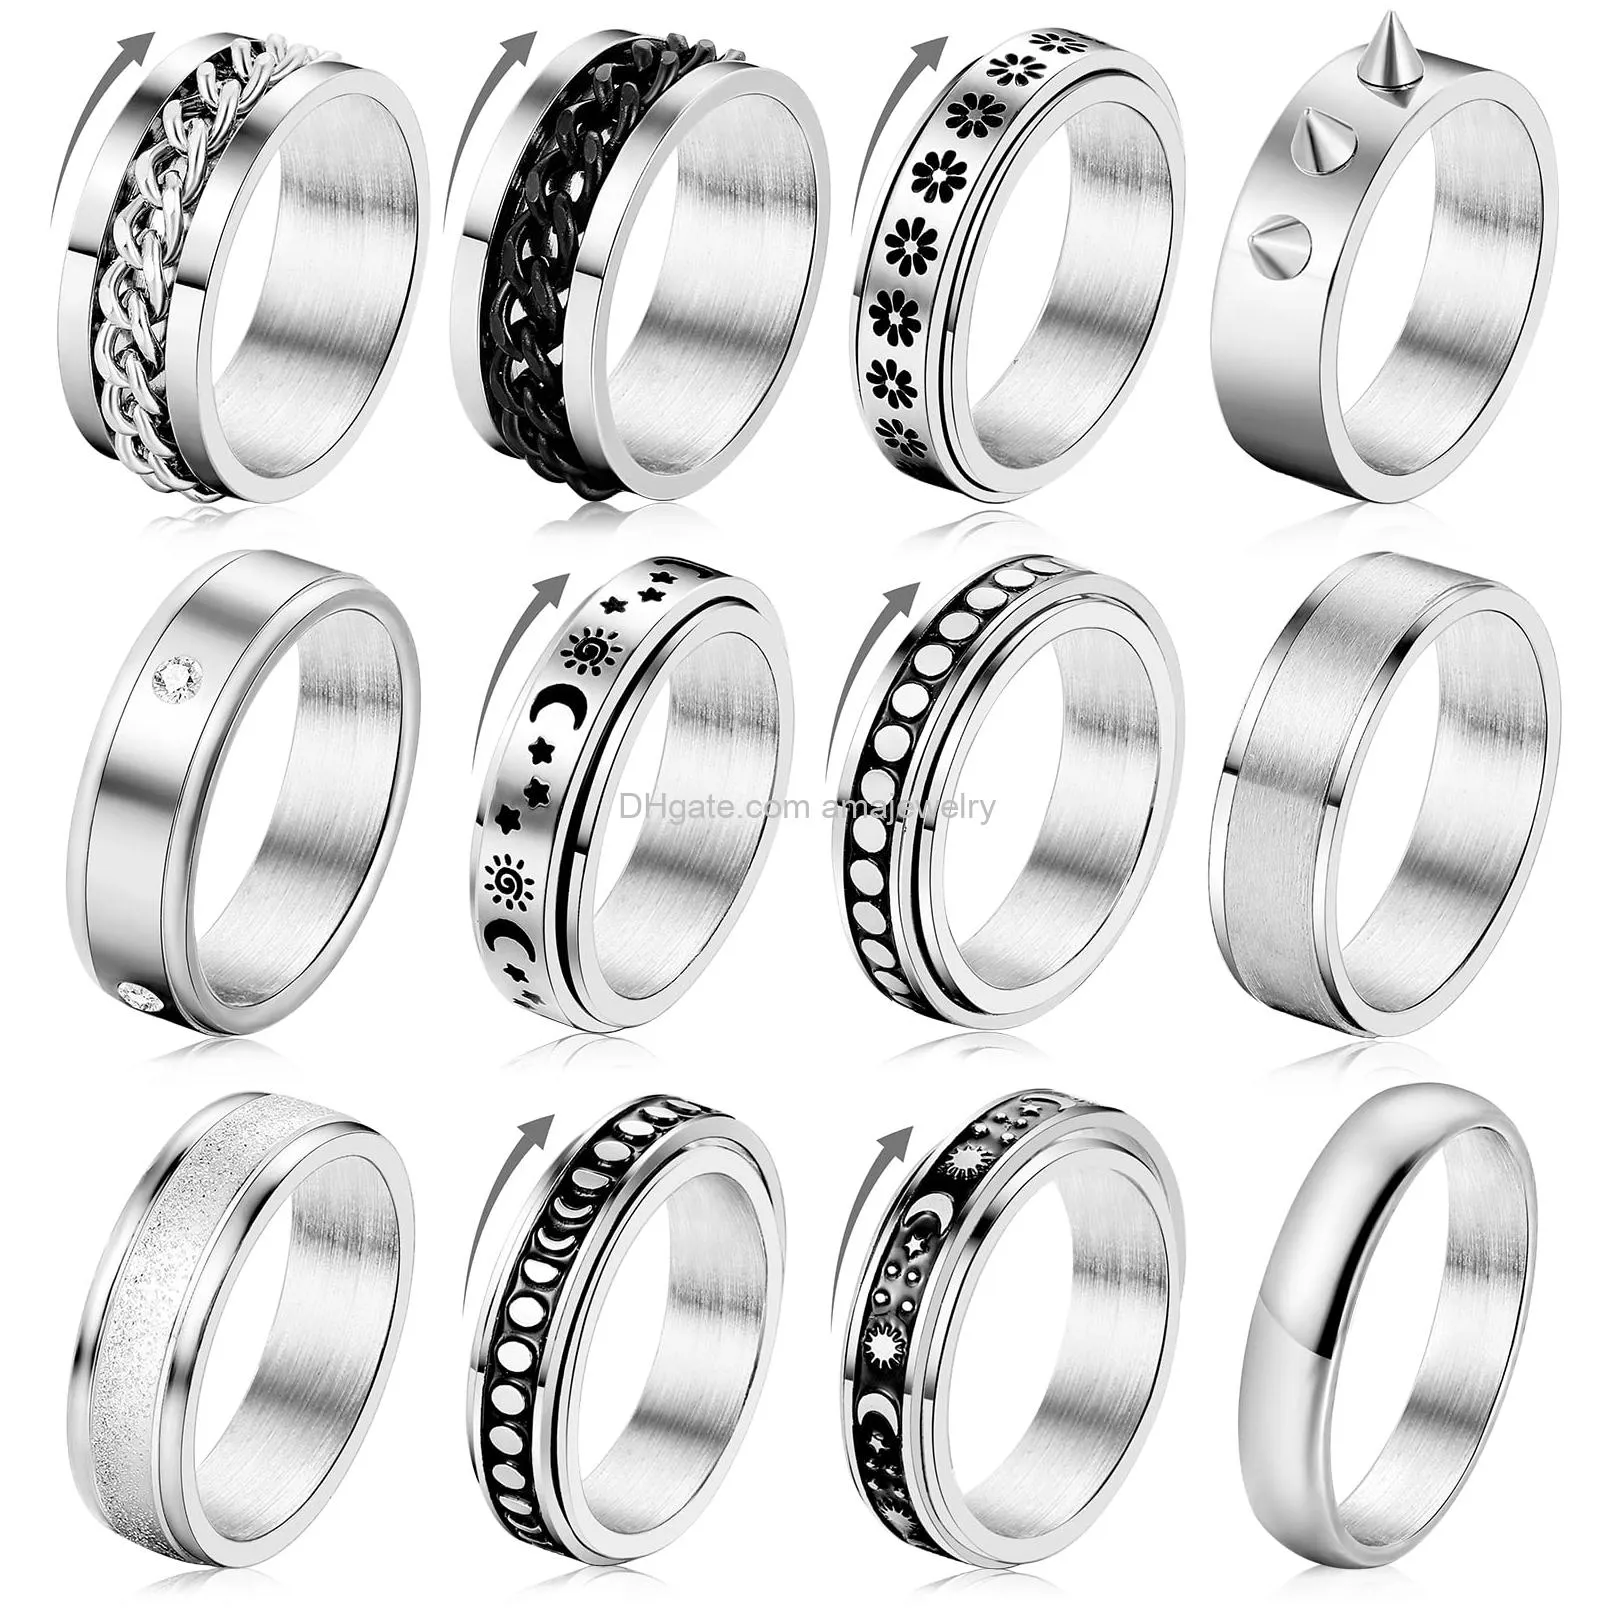 simple stainless steel band rings for women men cool silver mens ring pack plain black wedding pormise band ring set